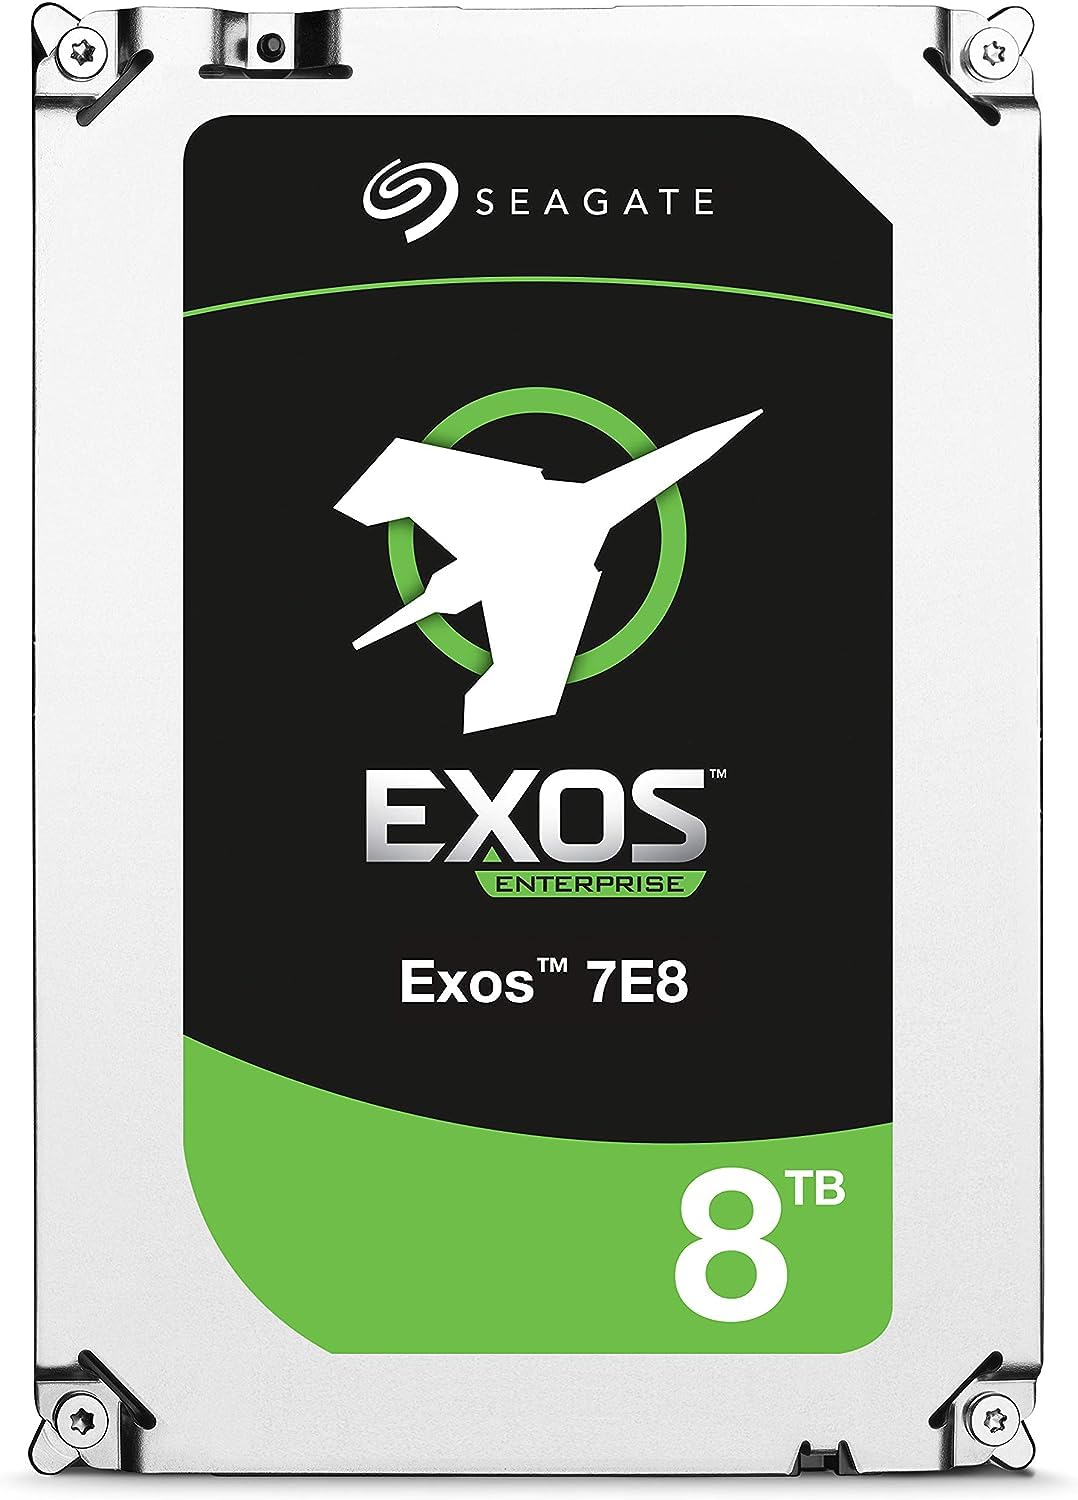 Seagate Exos 7E8 8TB Enterprise Capacity HDD - 7200 RPM, 256MB Cache, SATA III 6 Gb/s Interface, 3.5